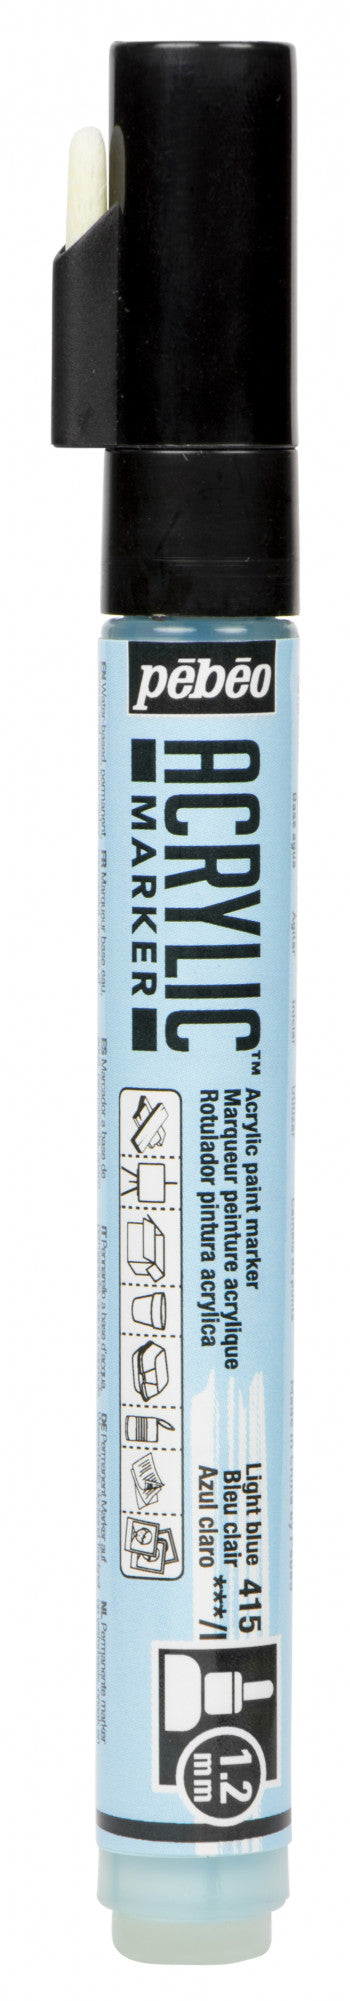 Acrylic Marker 1.2mm Pebeo Light Blue - 415